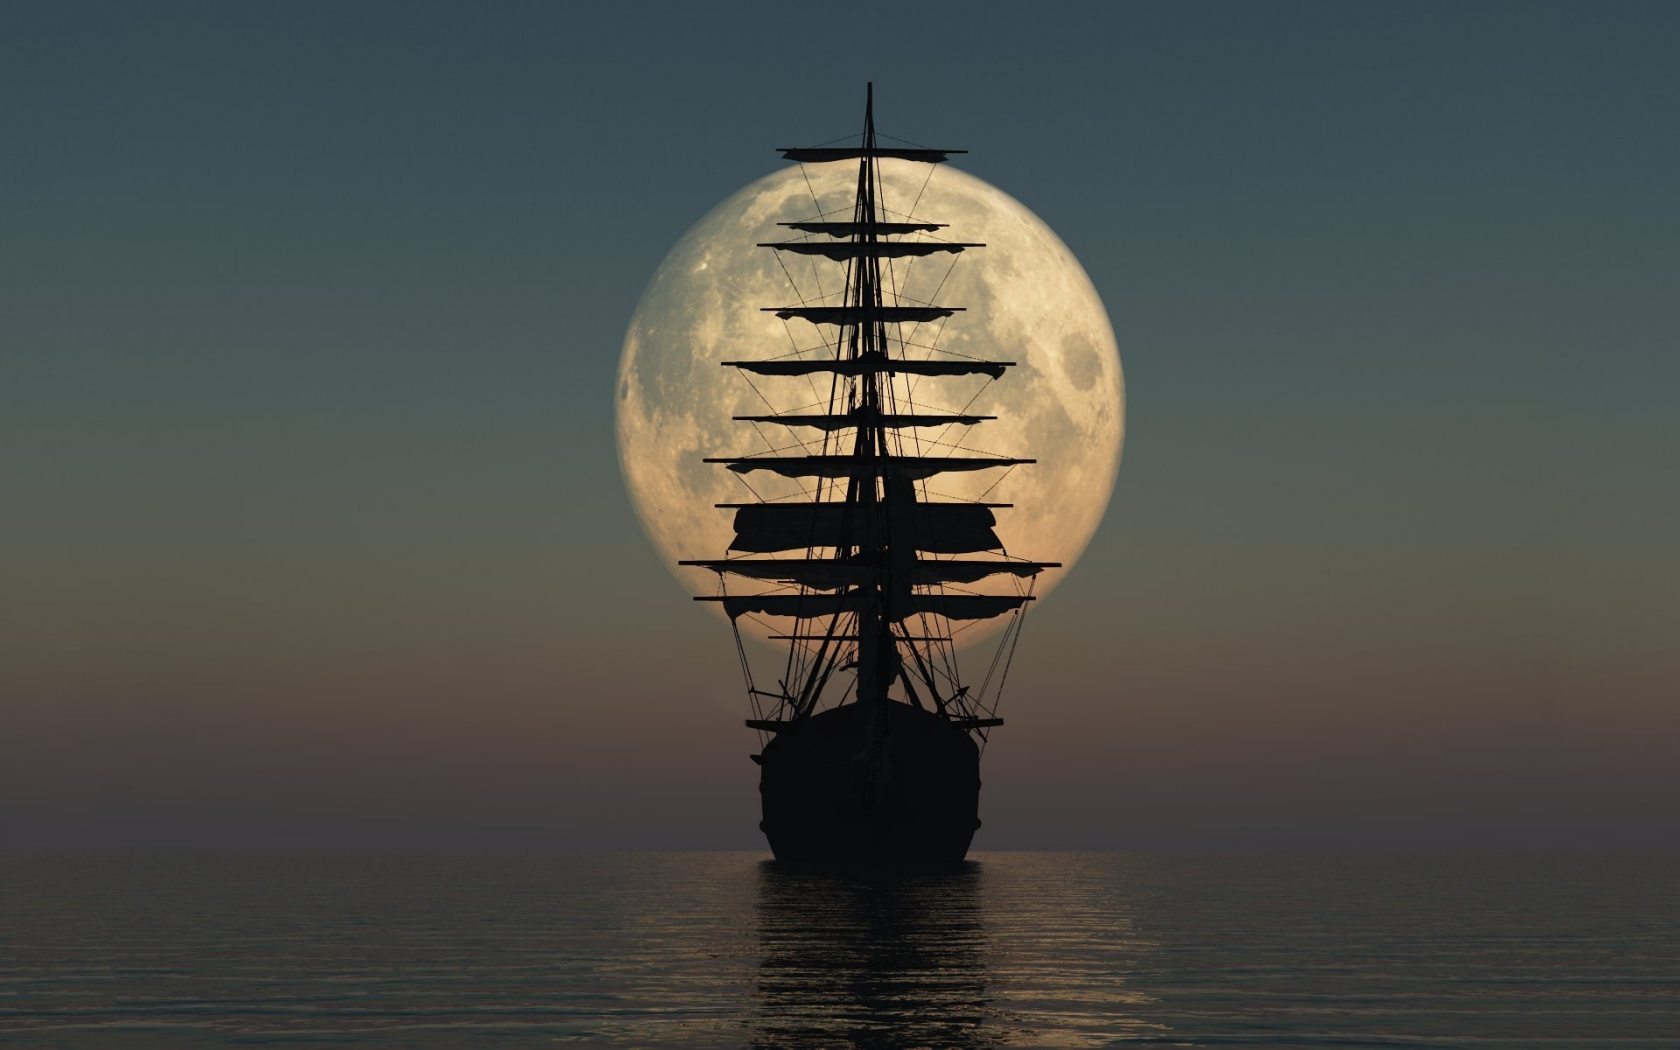 море, корабль, луна